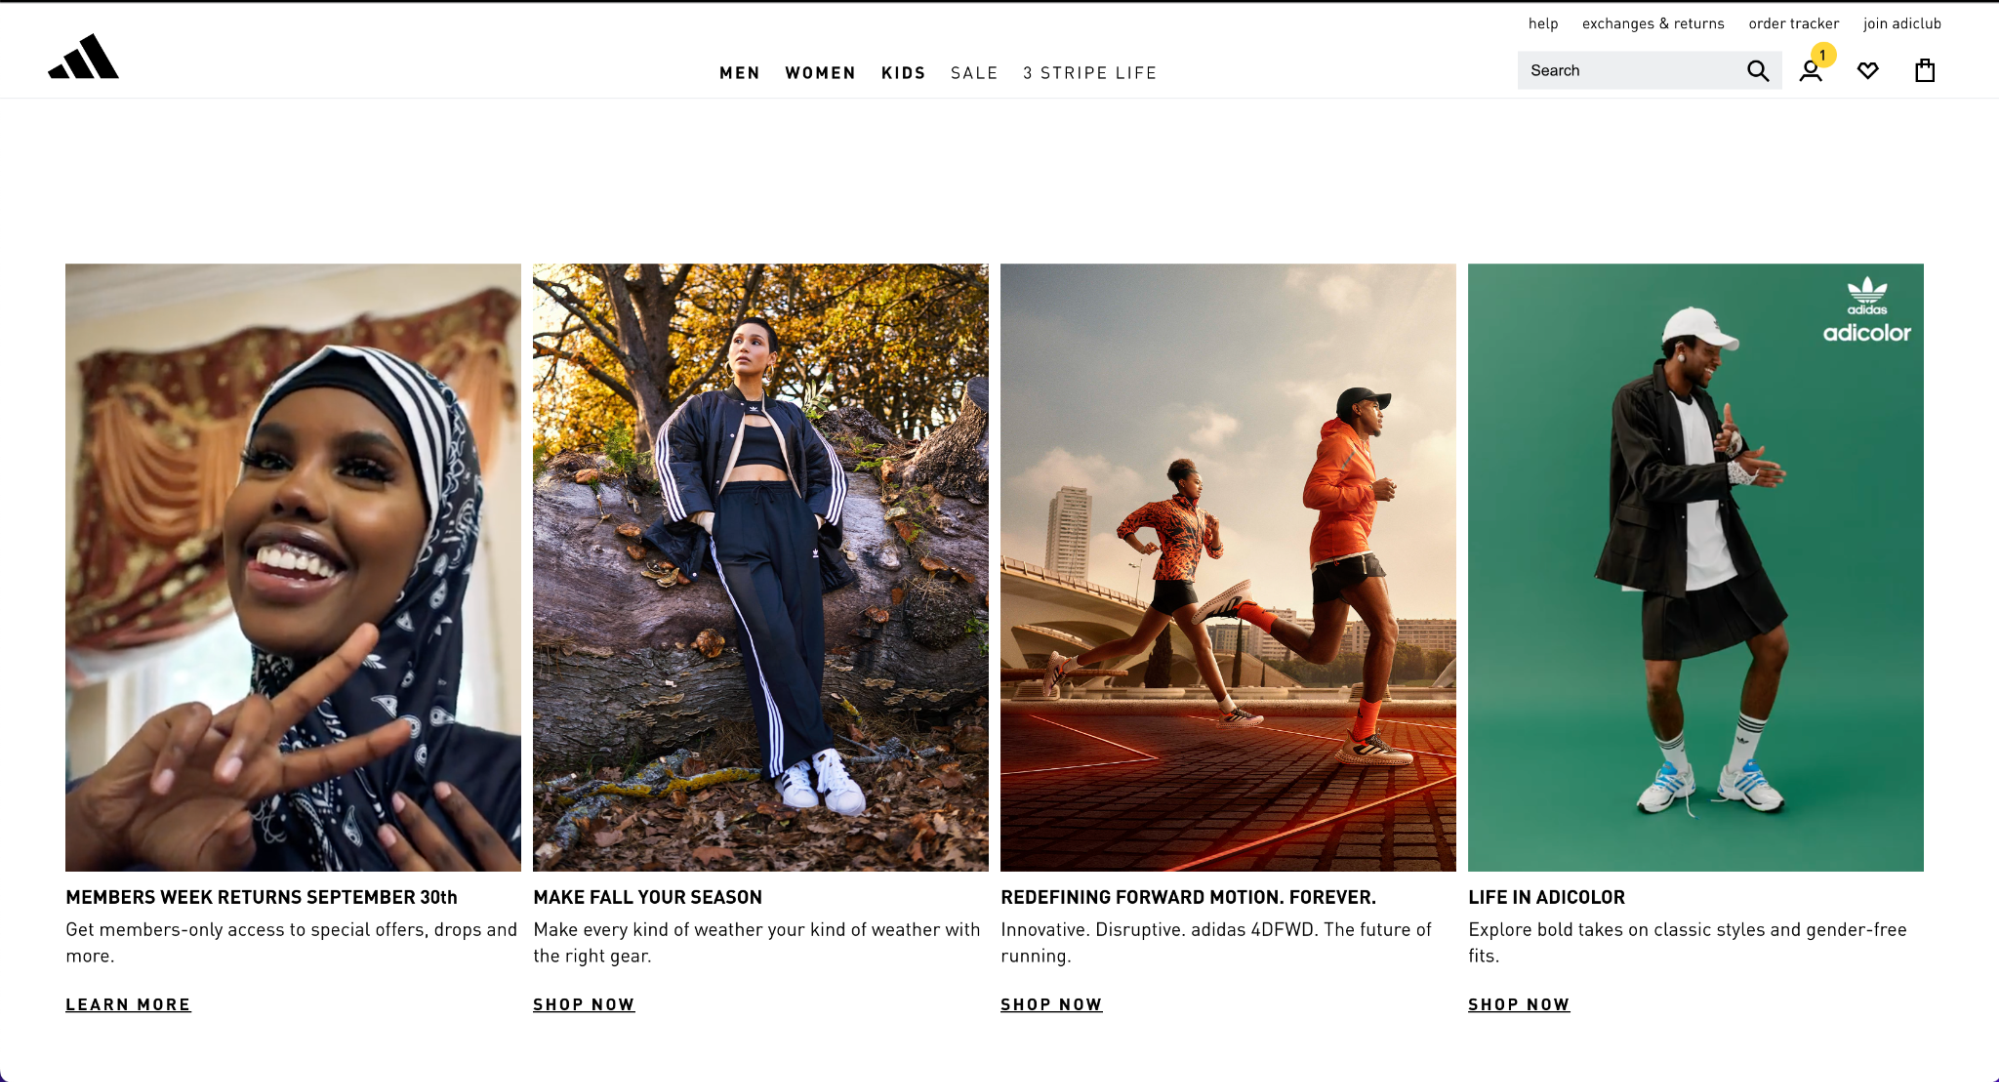 Adidas headless commerce site headless commerce platforms